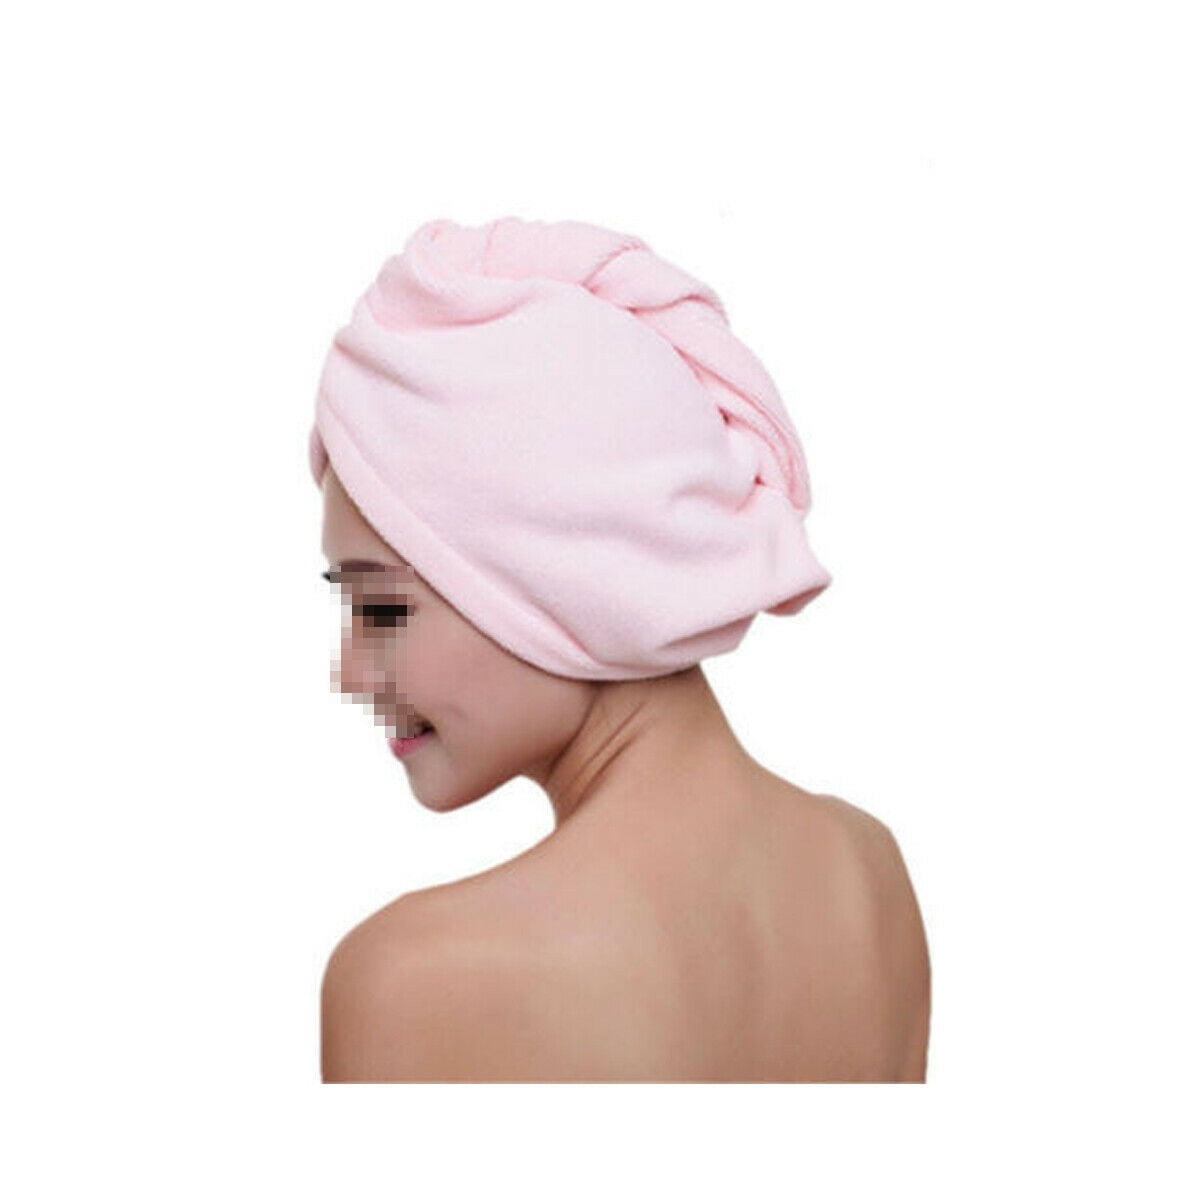 1*Turban Towel Twist Hair Quick Dry Microfiber Bath Spa Towel Cap Wrap K5L5 